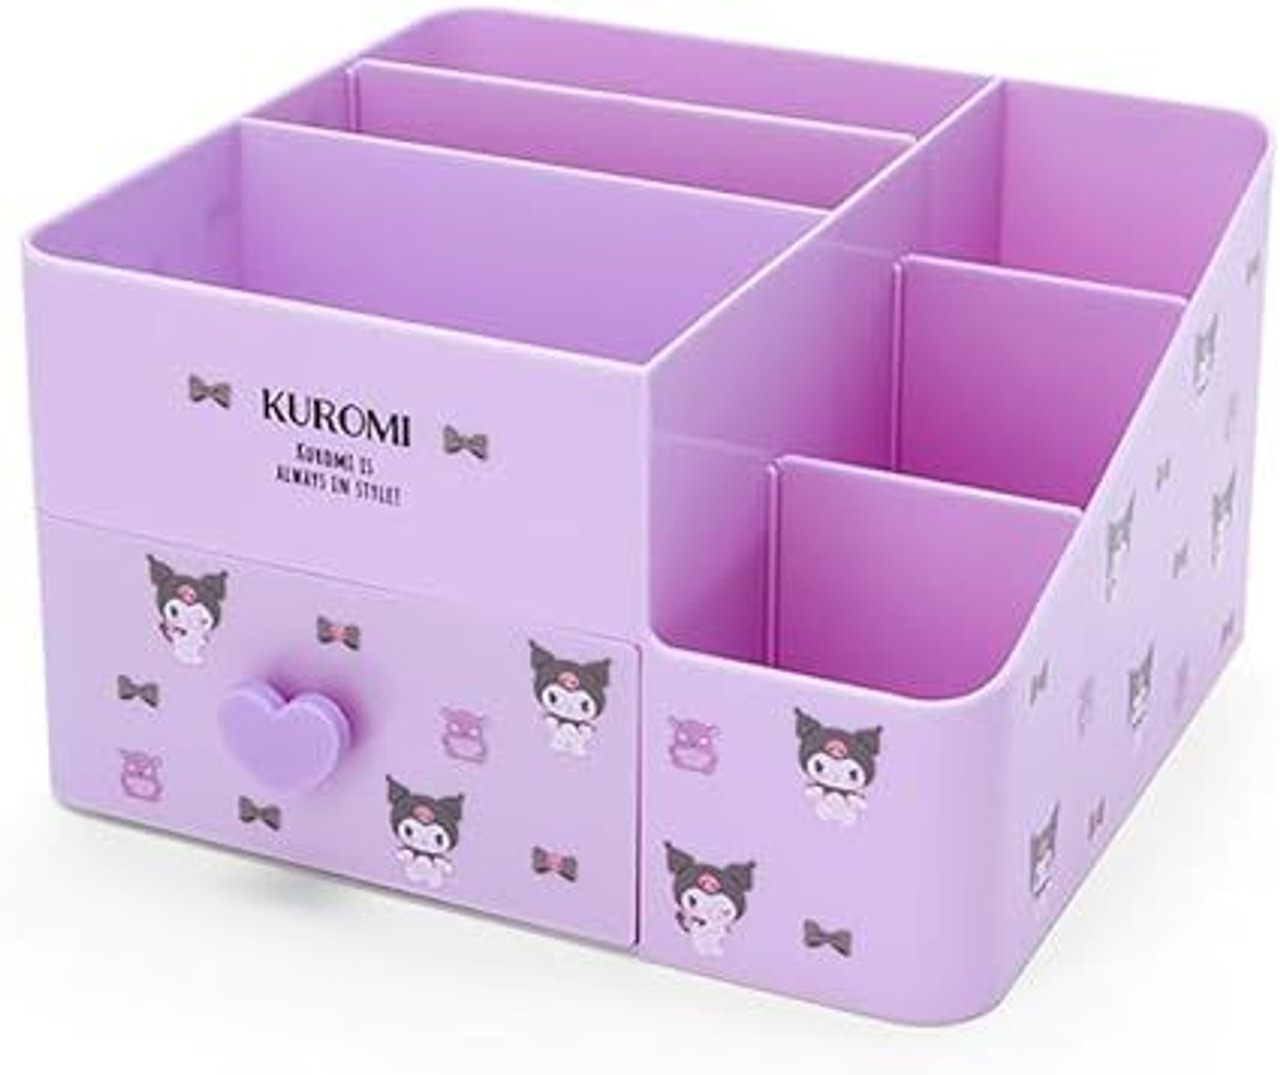 Kuromi Cosmetic and Makeup Storage Box Purple Sanrio